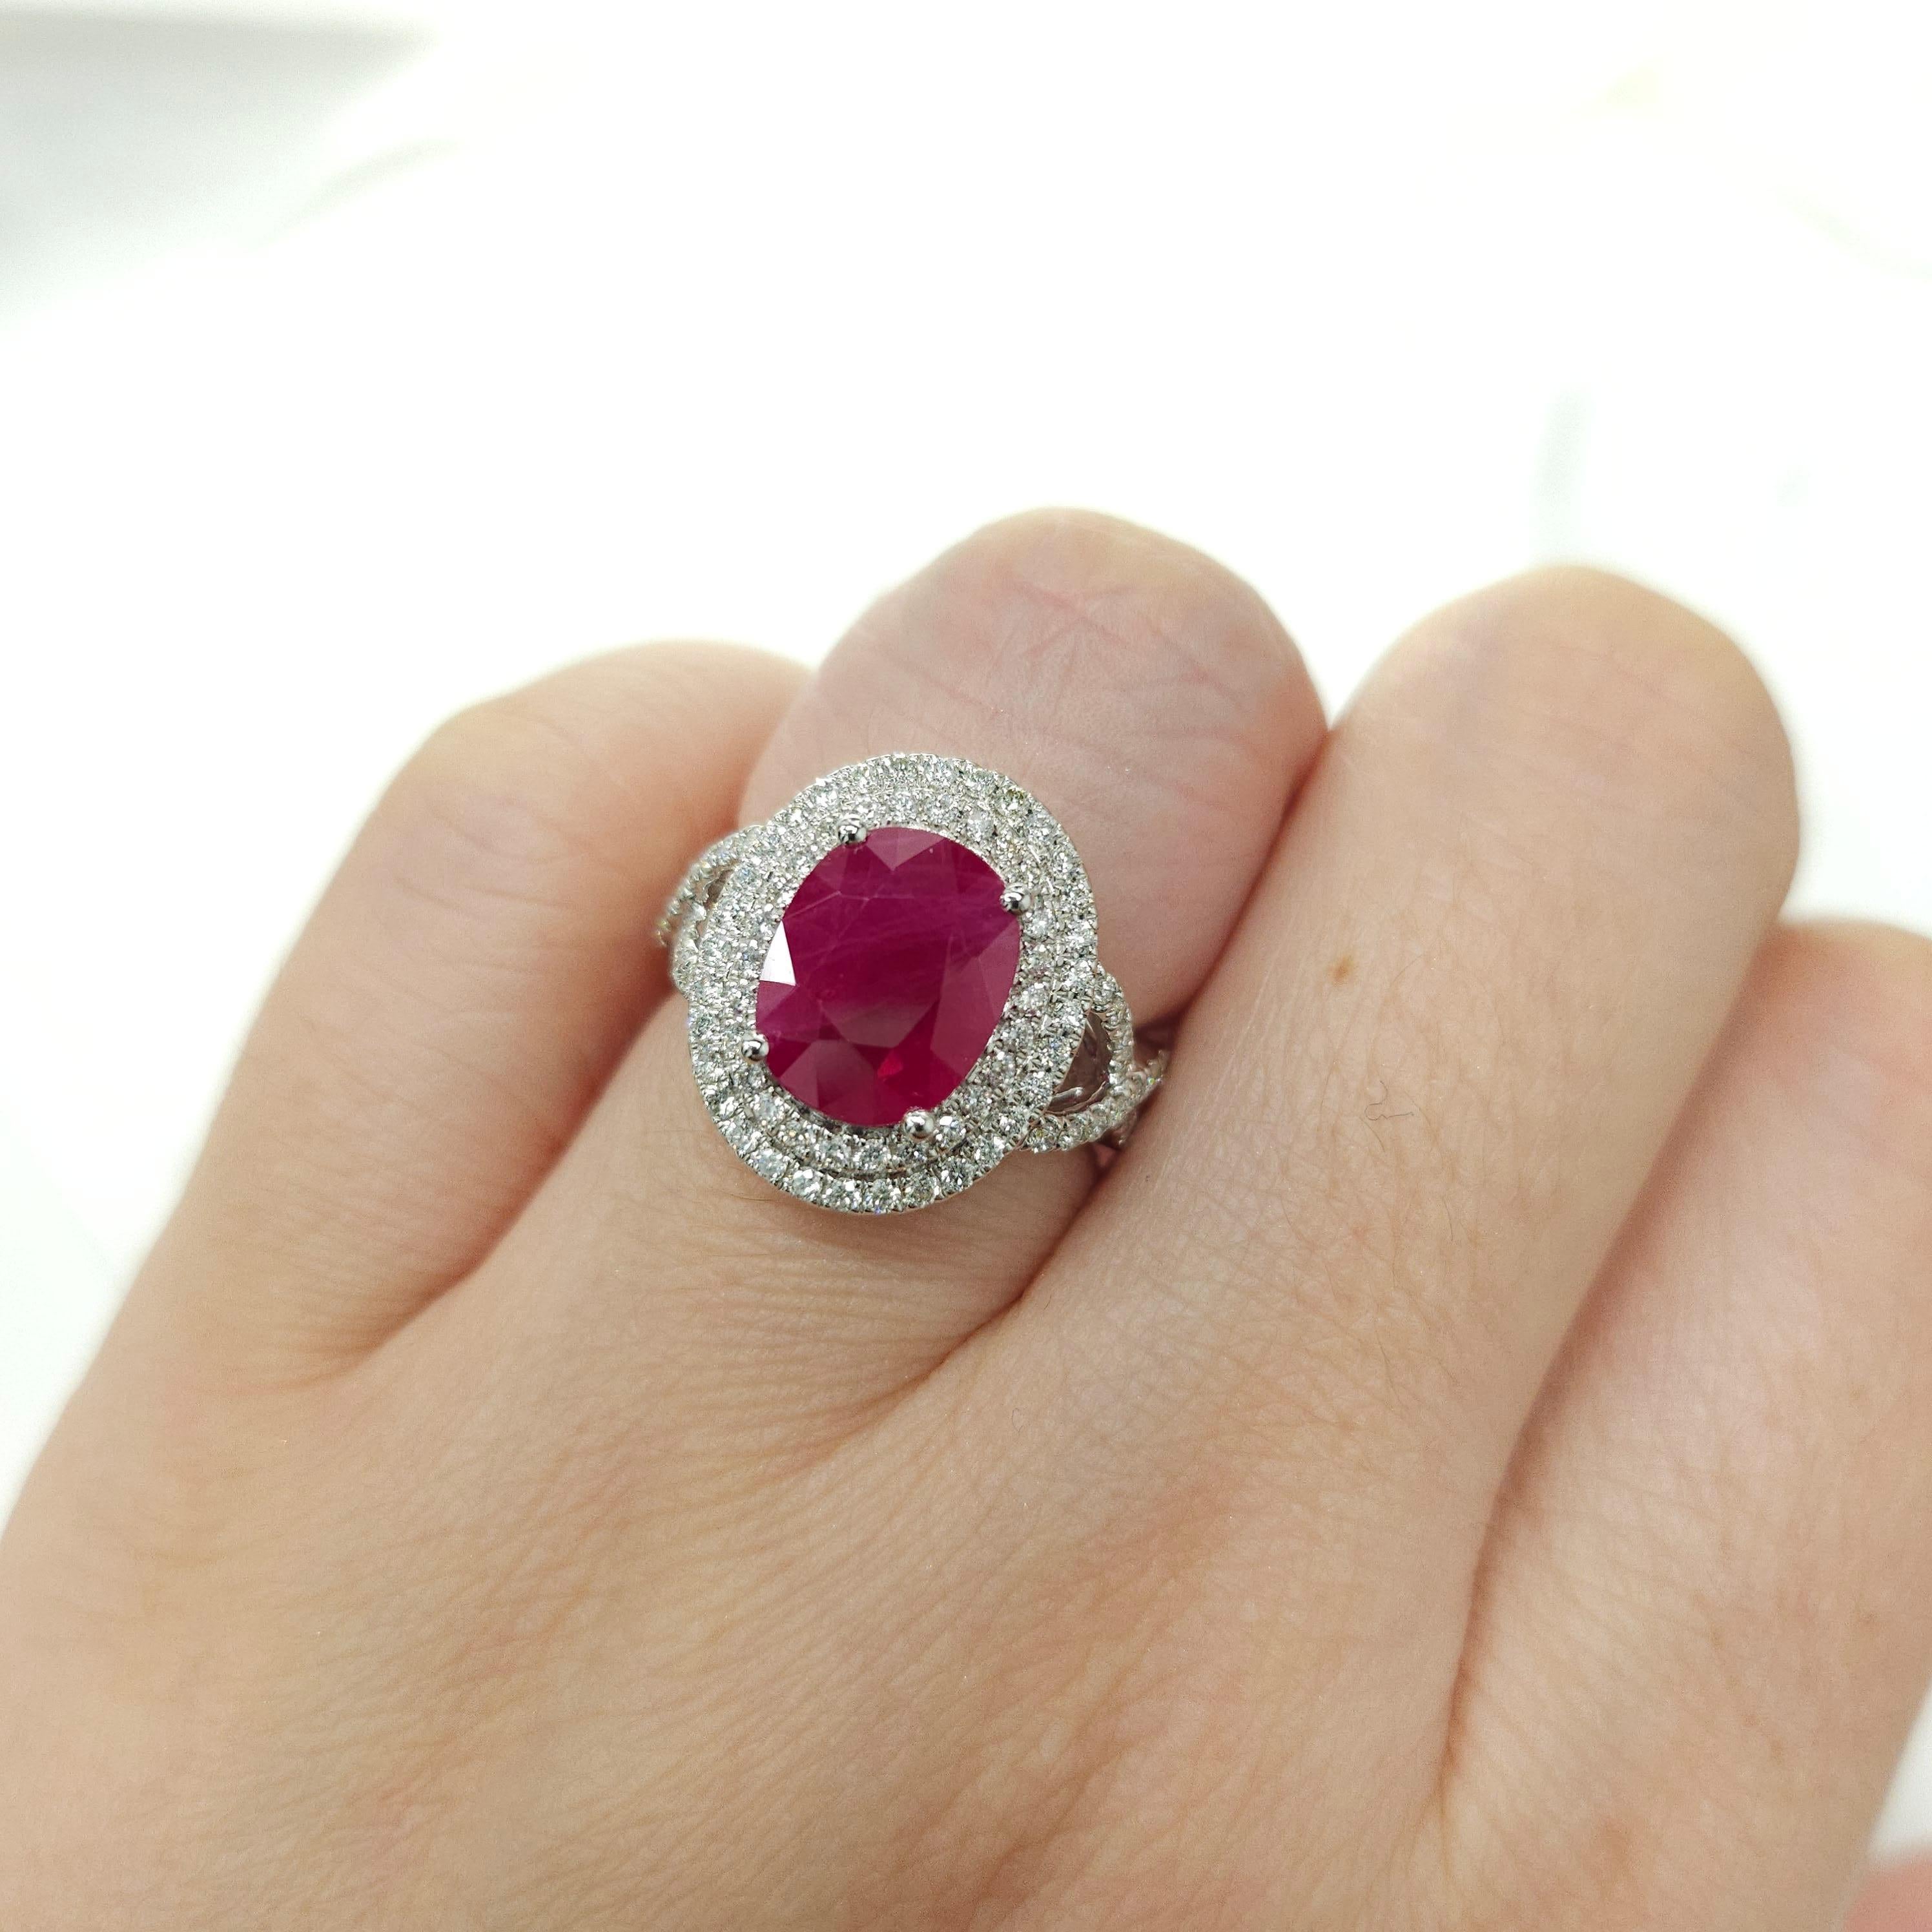 IGI Certified 3.42 Carat Burma Ruby & Diamond Ring in 18K White Gold For Sale 1